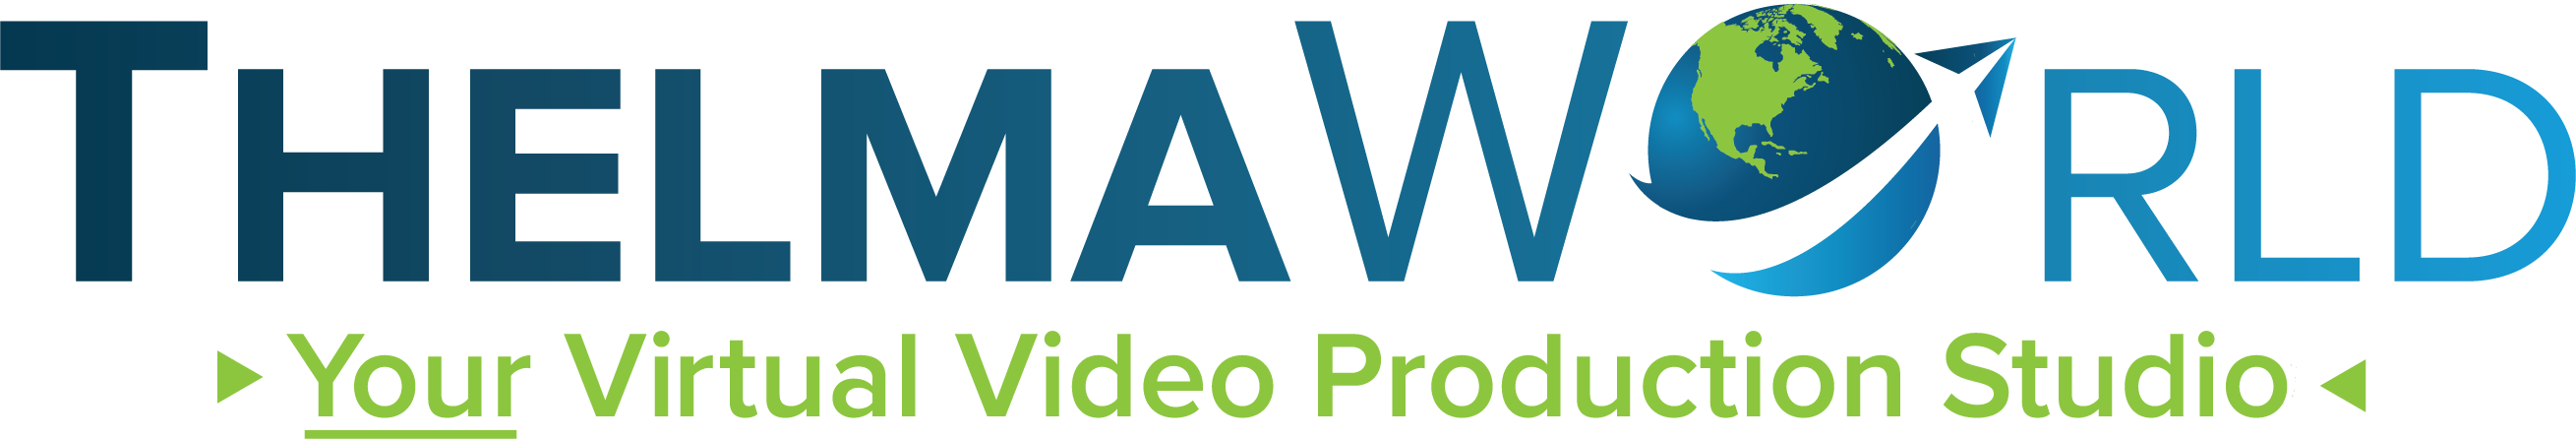 ThelmaWorld | Your Virtual Video Production Studio